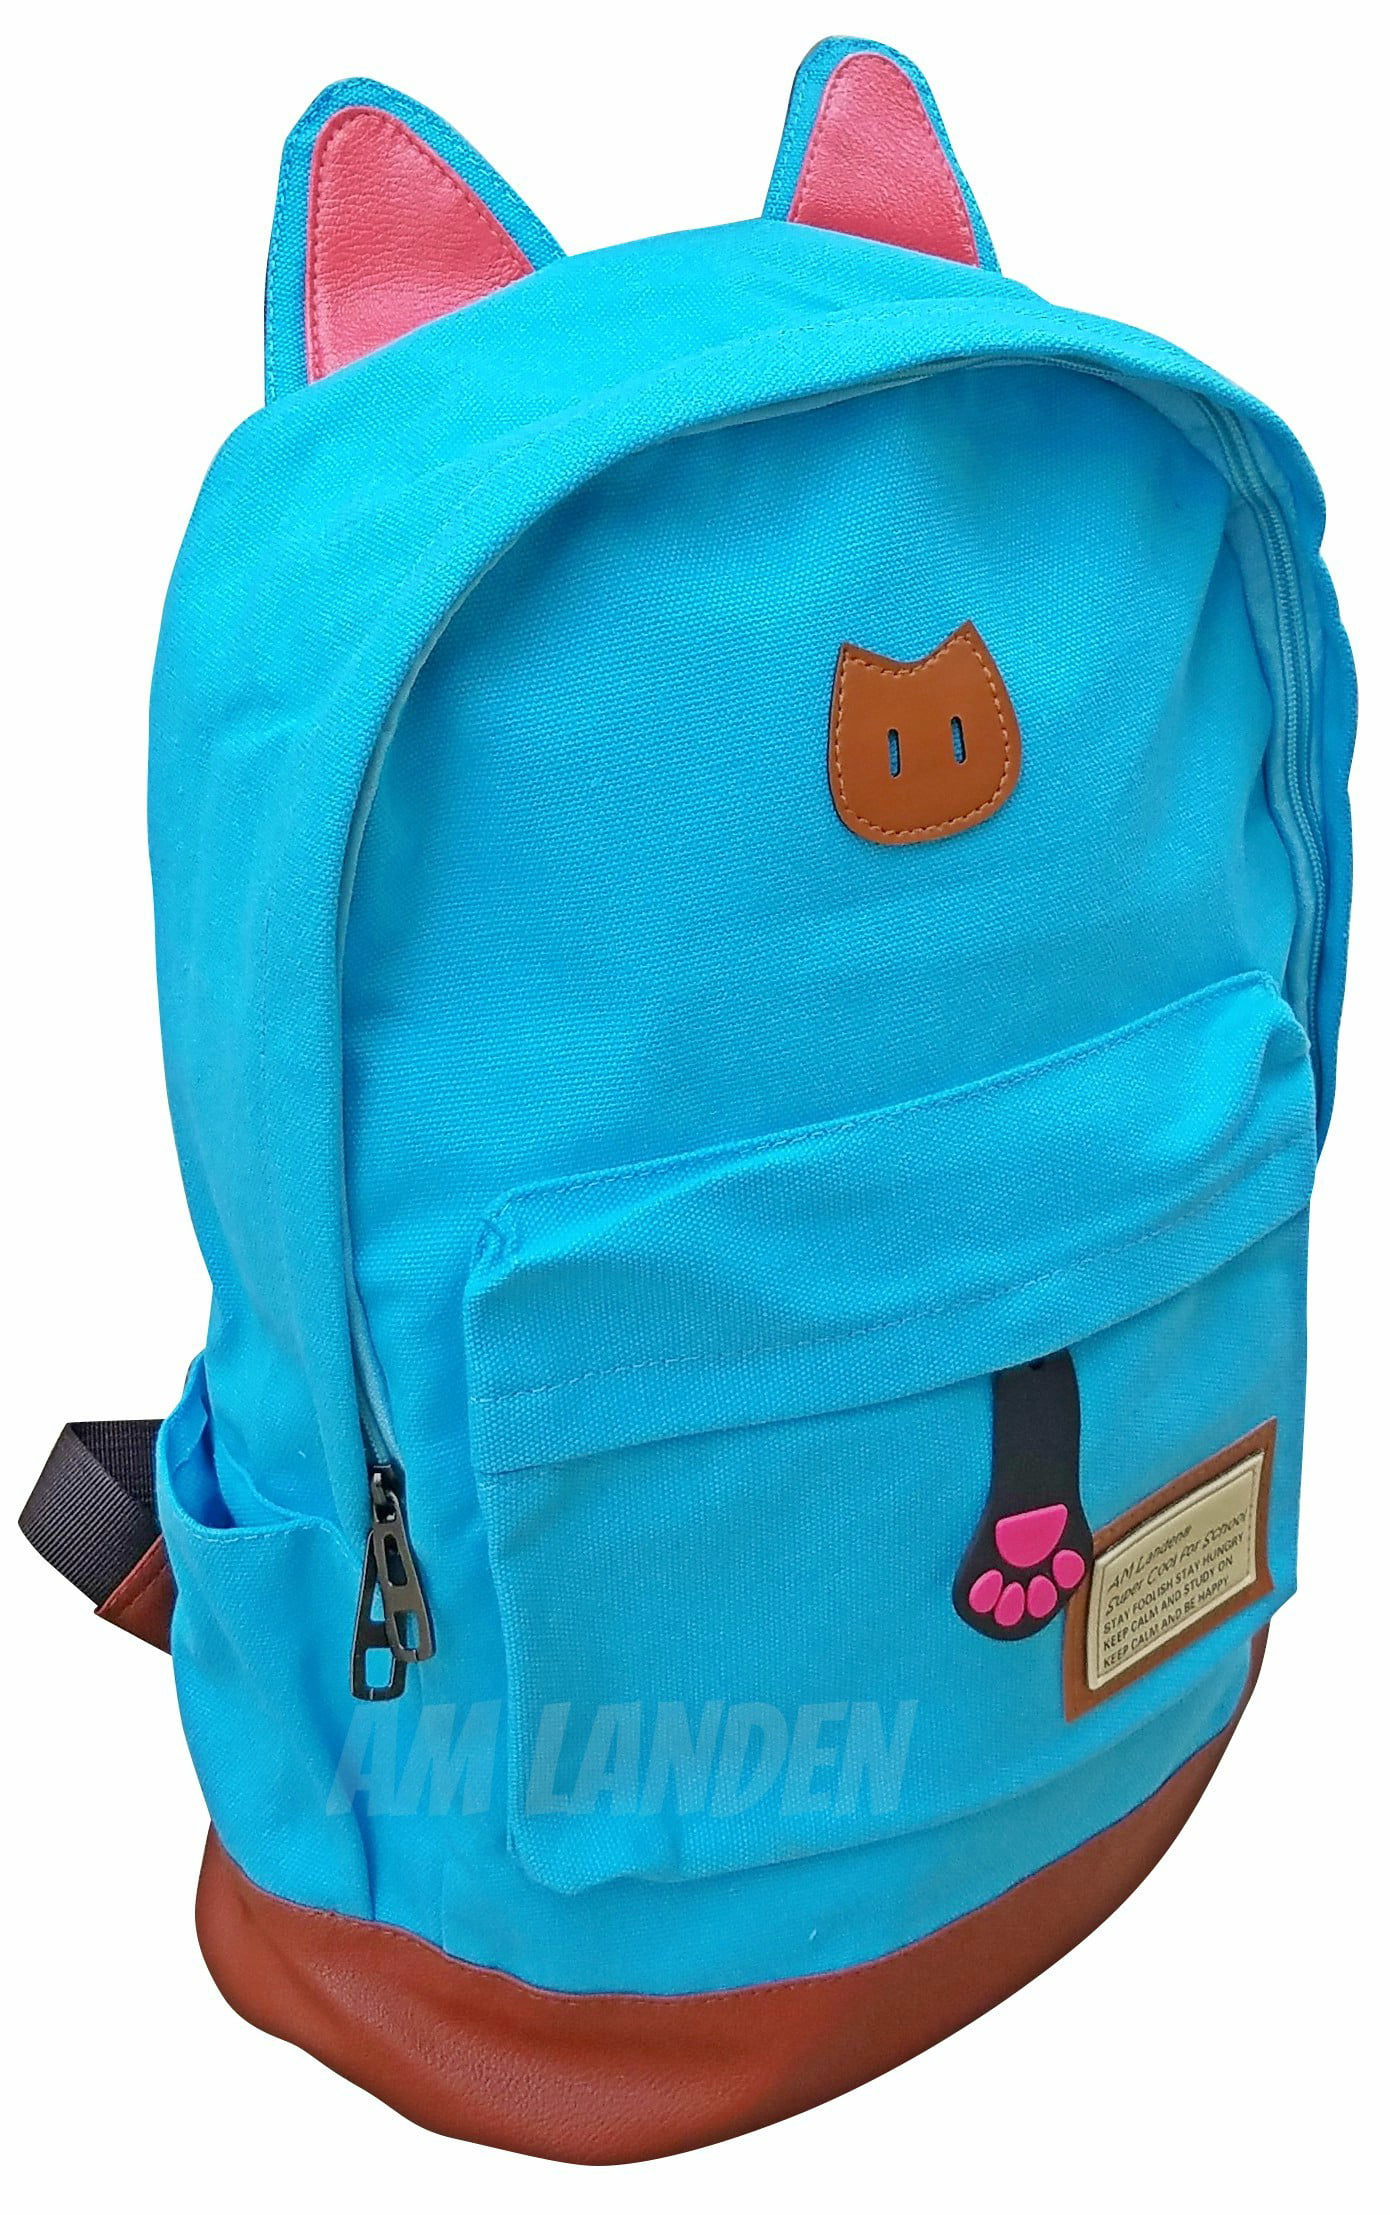 AM Landen Teal Blue Super Cute CAT Ears Backpack School Bag Travel Backpack 